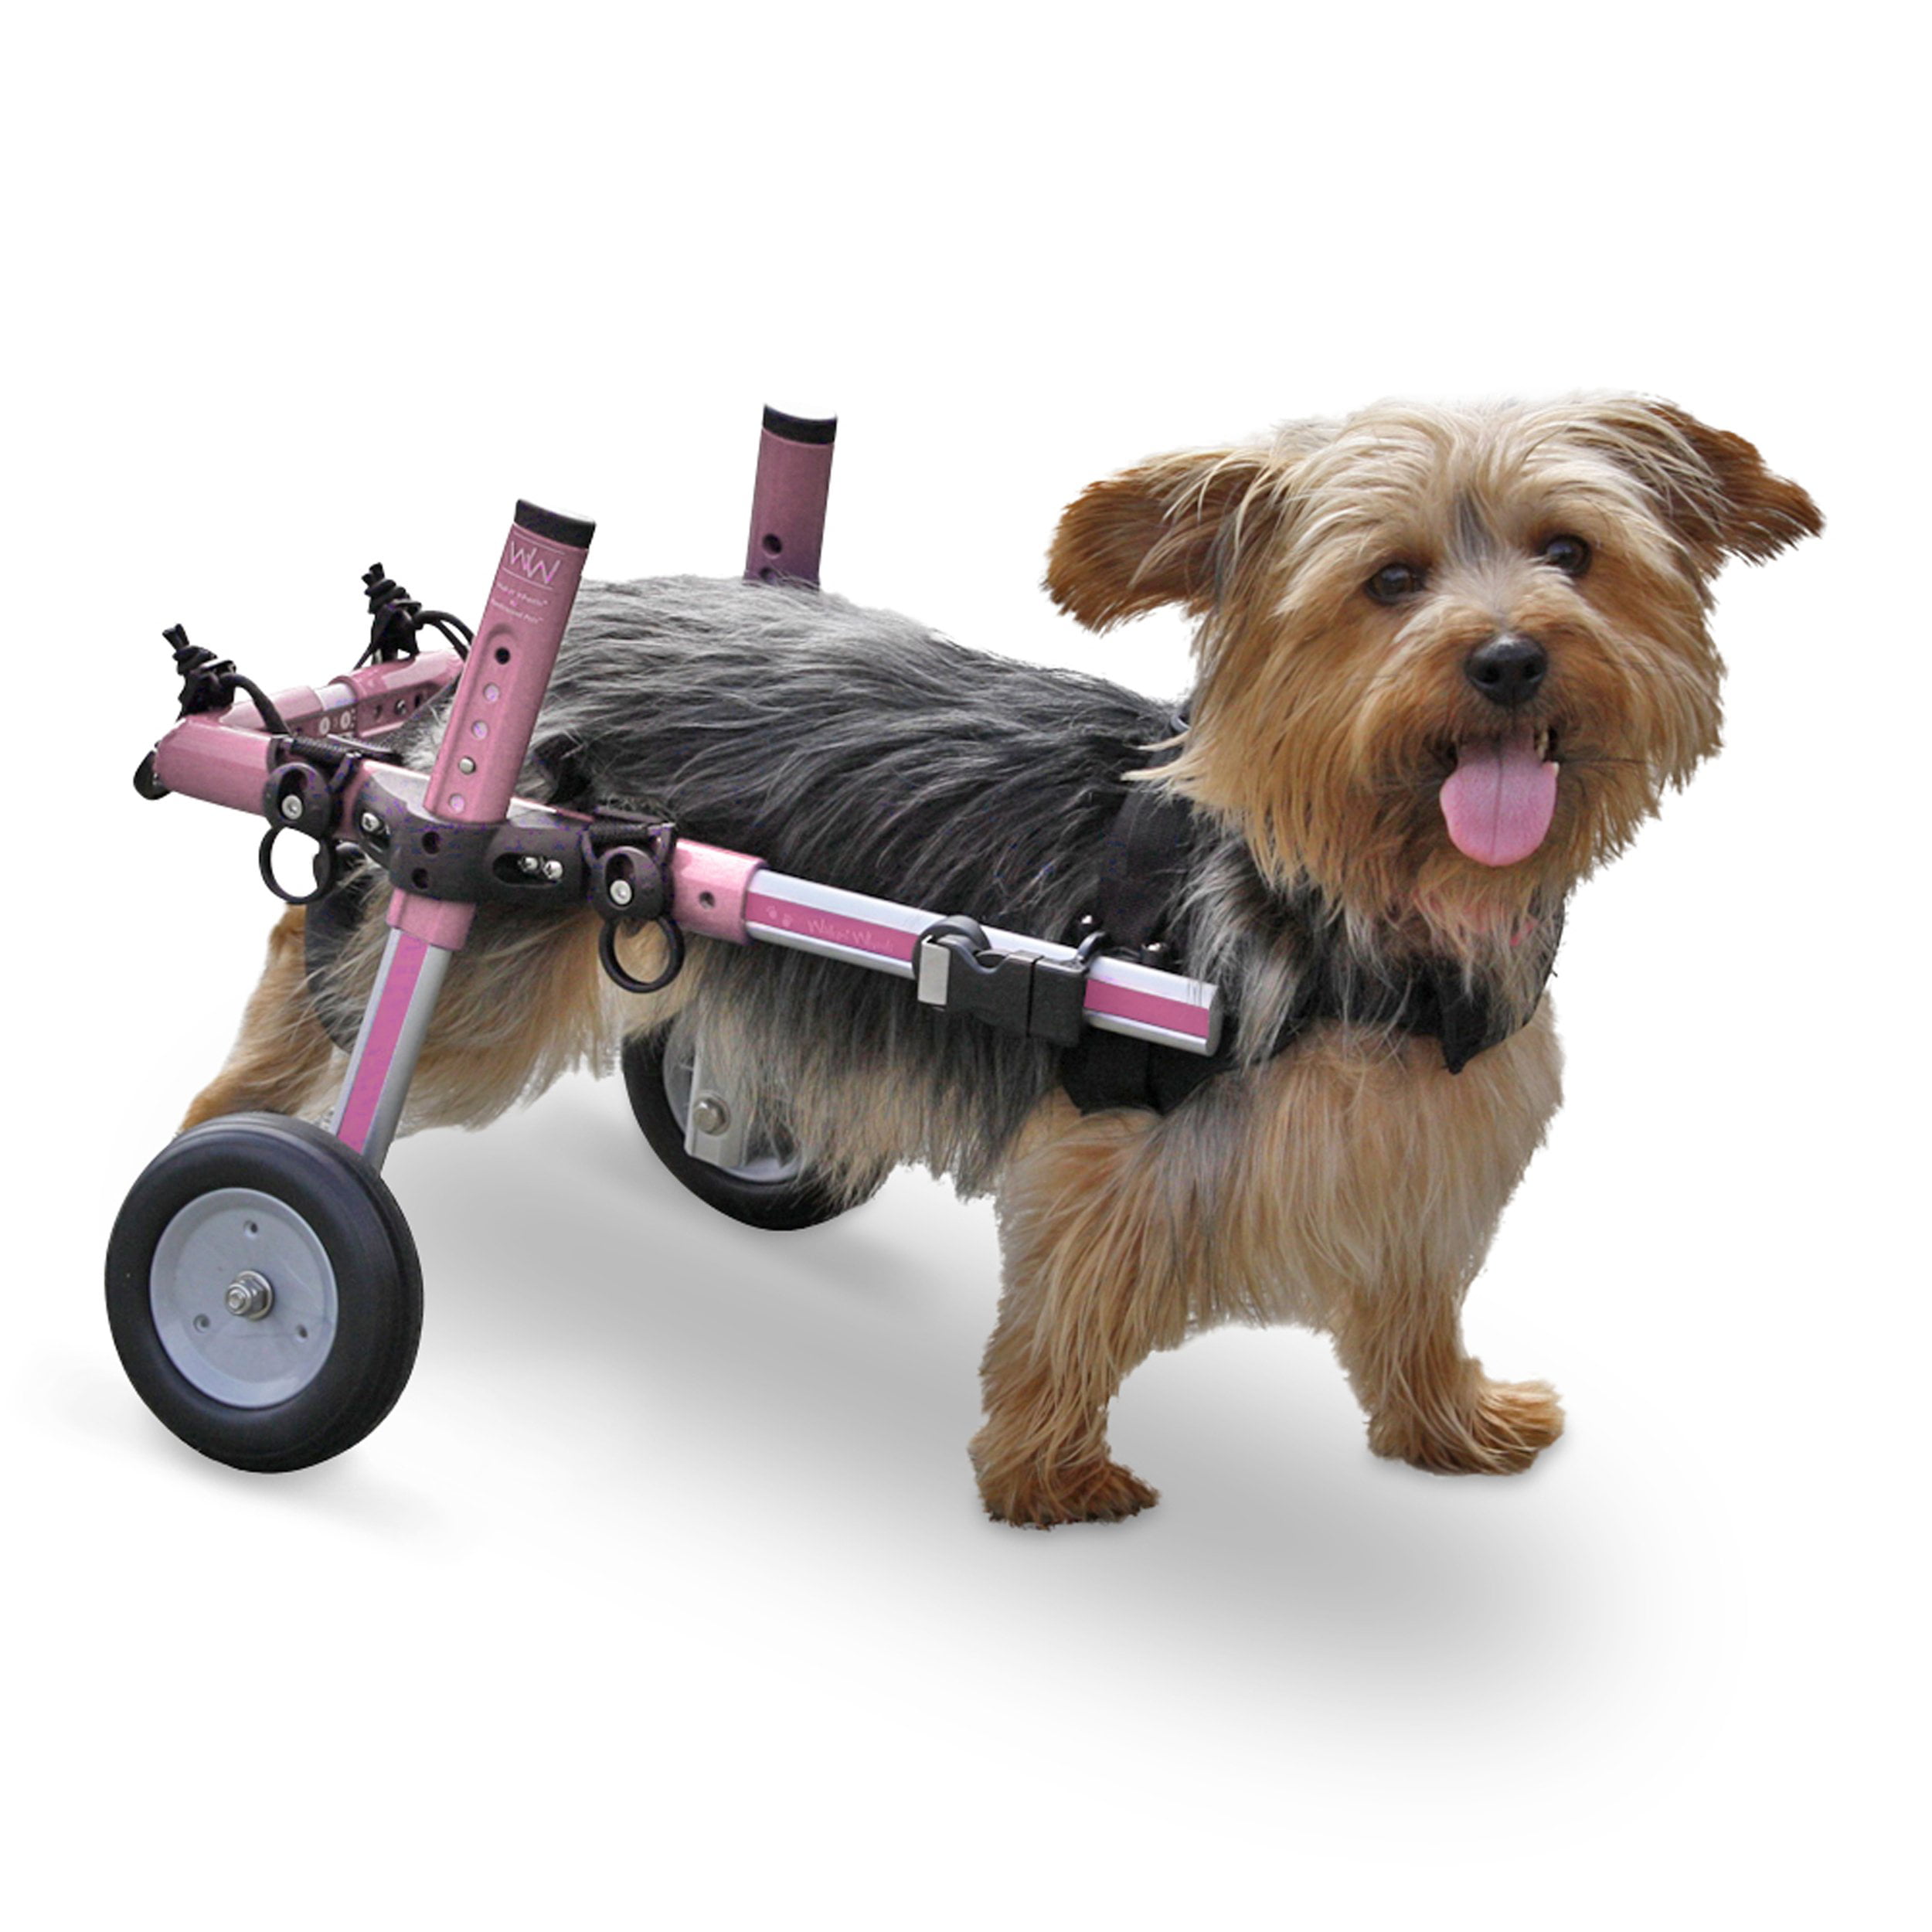 Walkin' Wheels Dog Wheelchair for Small Dogs 1125